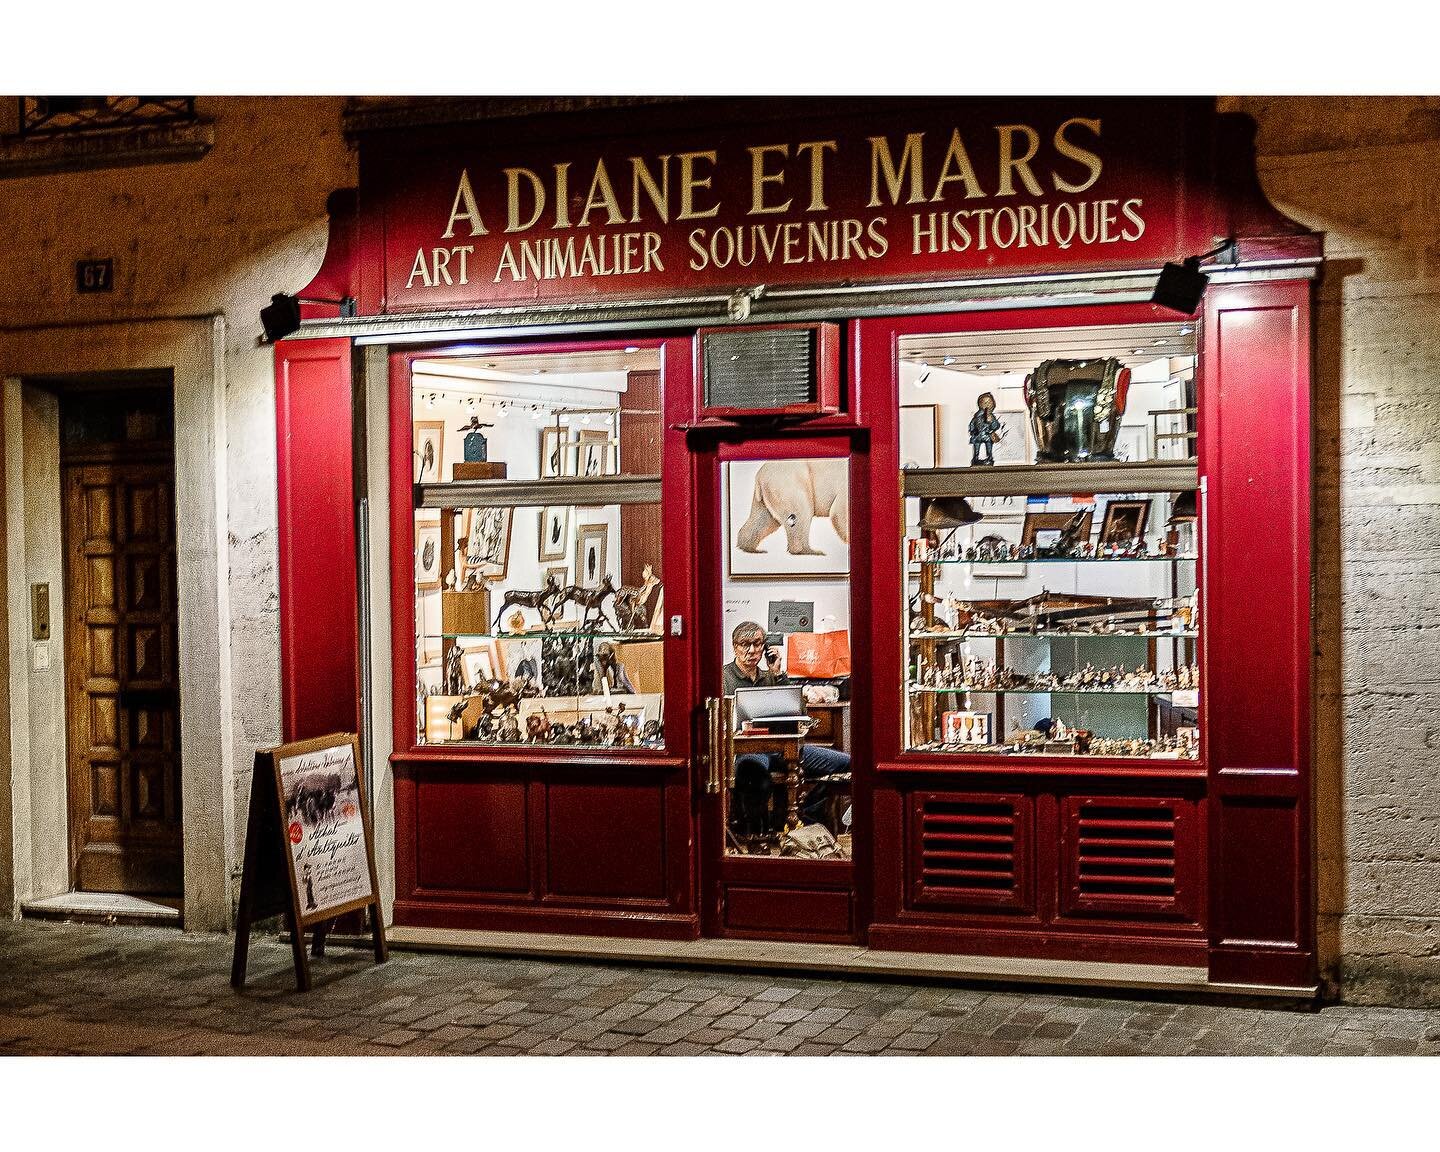 A Diane et Mars - Paris, France - 2019

#nilevinczphotography #nikonnofilter #yourshotphotographer #streetphotography #travelphotography #sweetstreetbeat #life_is_street #peopleinplaces #urbanlandscapes #photocinematica #eyeshotmag #madewithlightroom